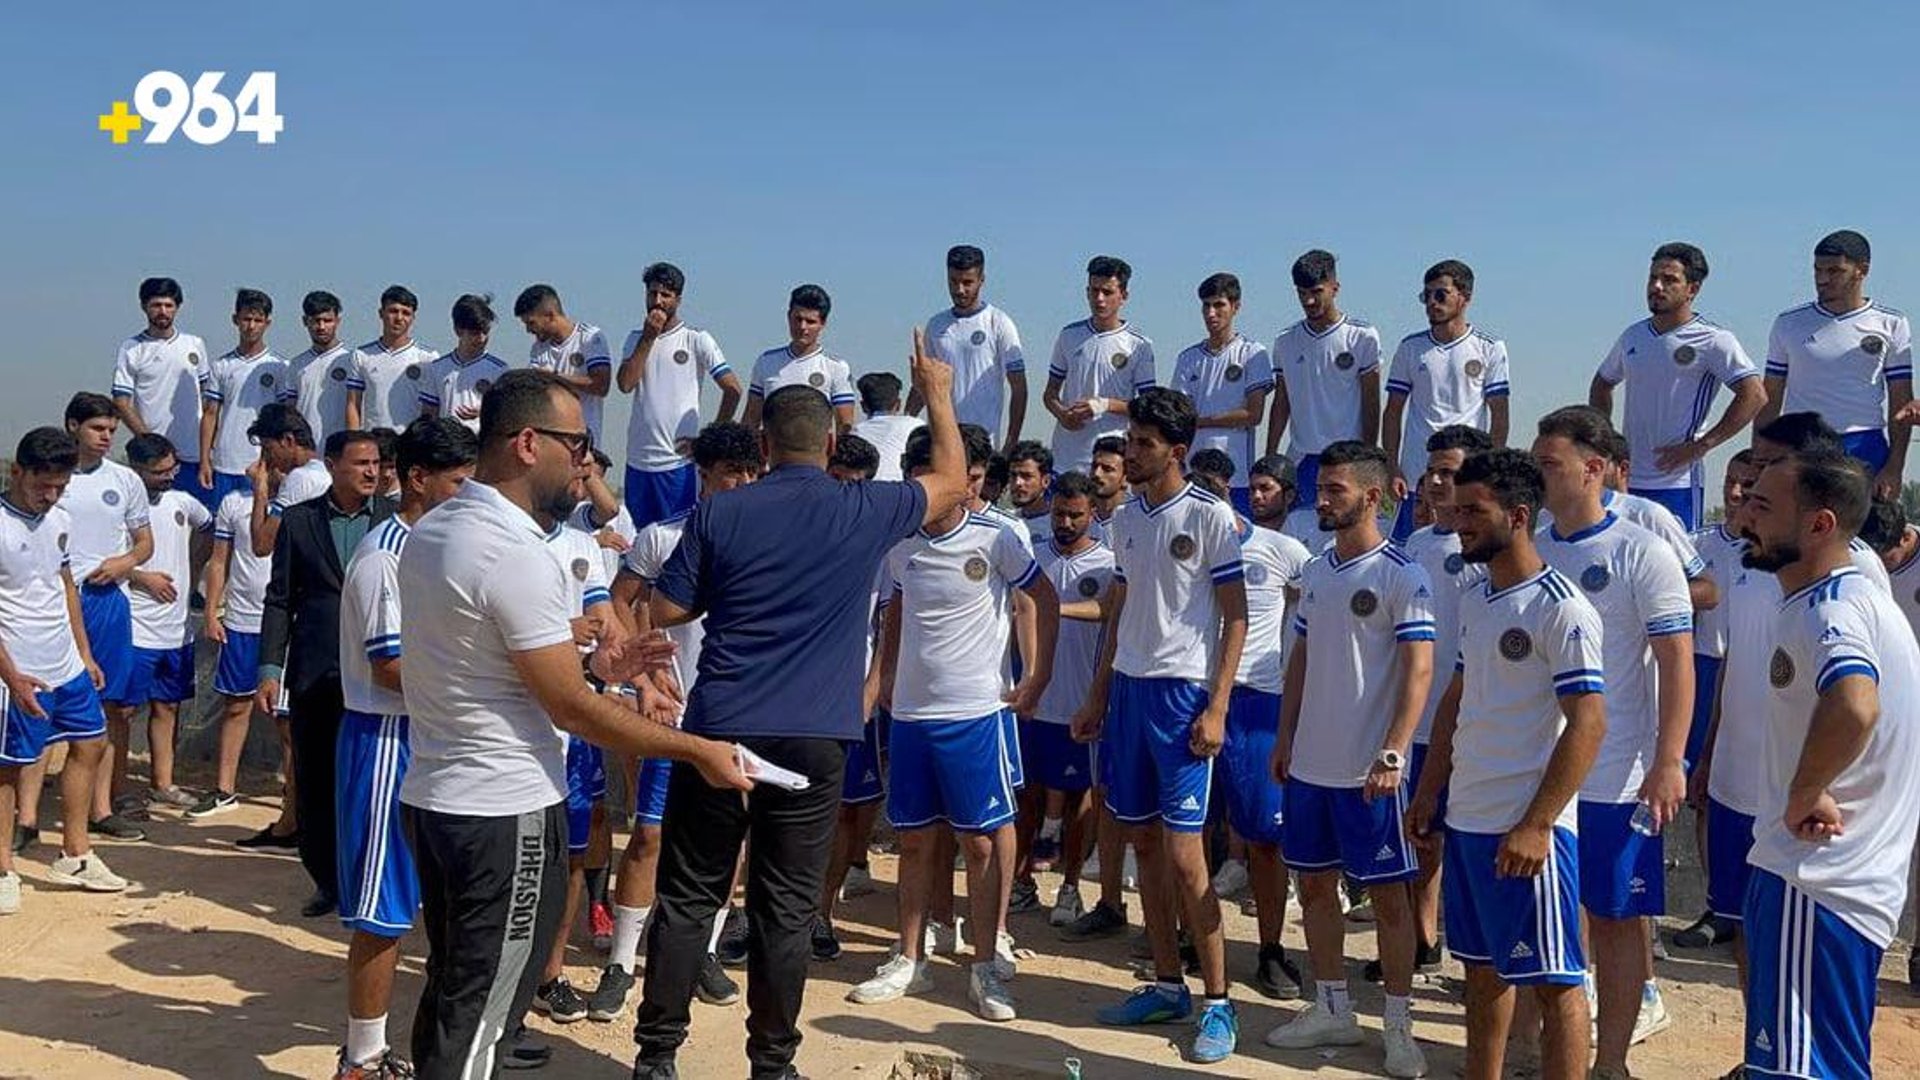 Middle Euphrates Technical University organizes marathon to kick off academic year